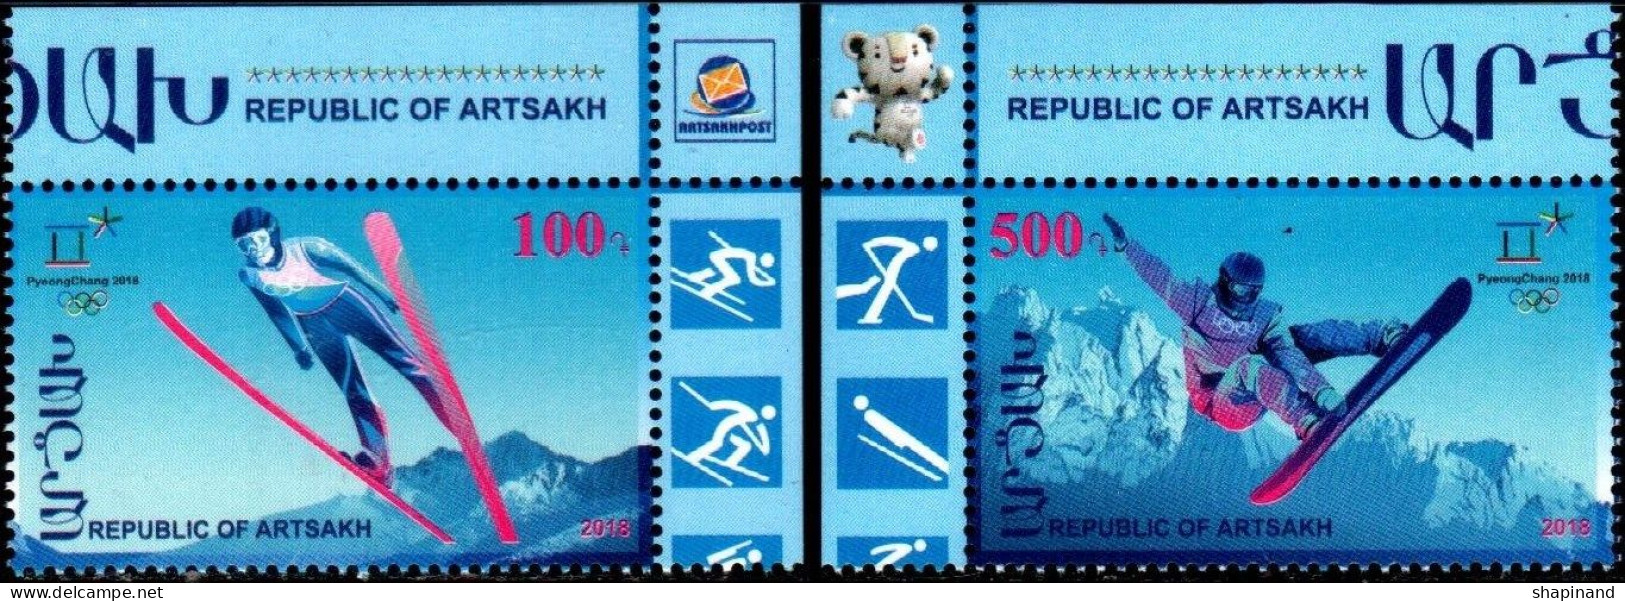 Artsakh 2018 "XXIII Winter Olympic Games.PyengChang - 2018" 2v Quality:100% - Arménie